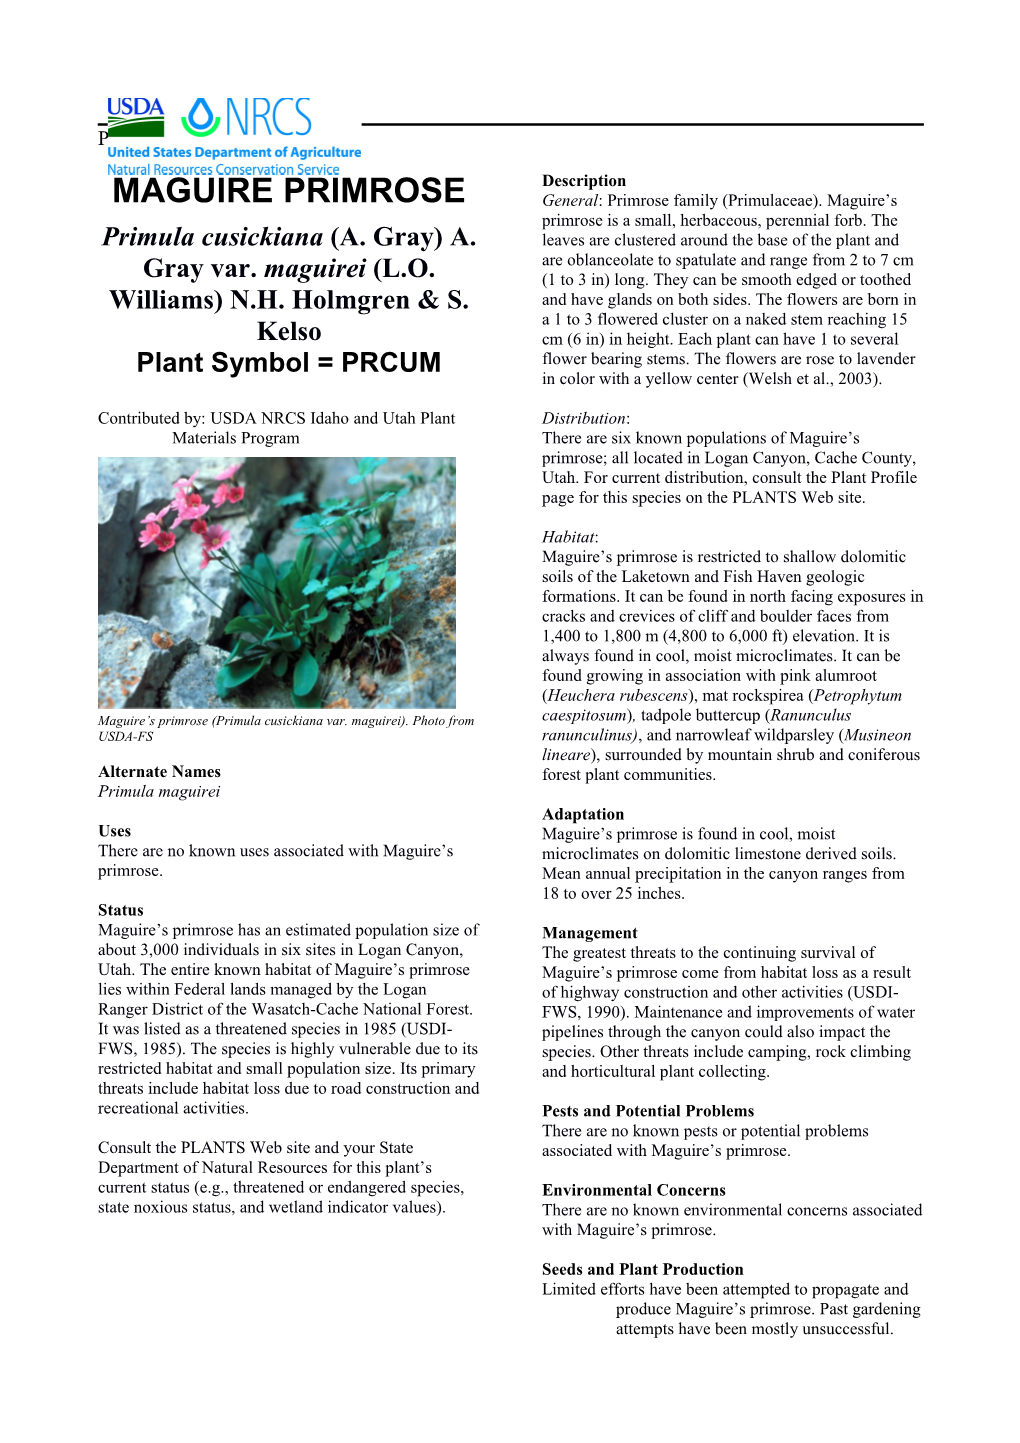 Plant Guide for Maguire's Primrose (Primula Cusickiana Var. Maguirei)